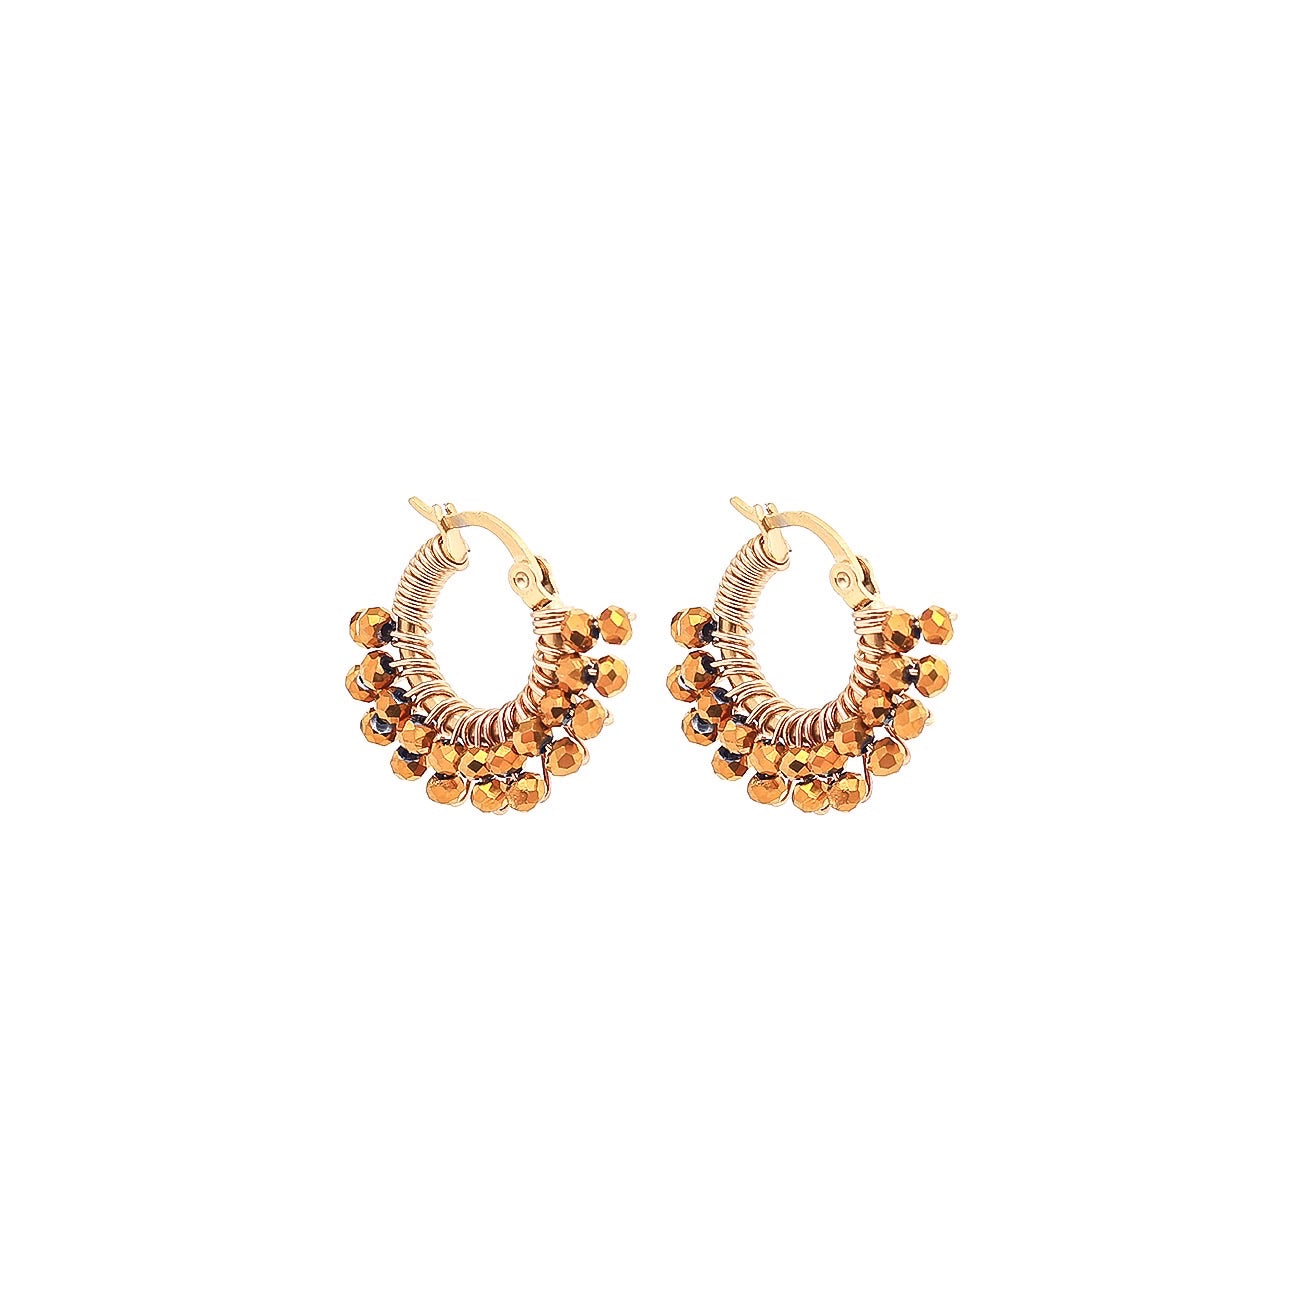 Tiny Glam loop earrings - Gold